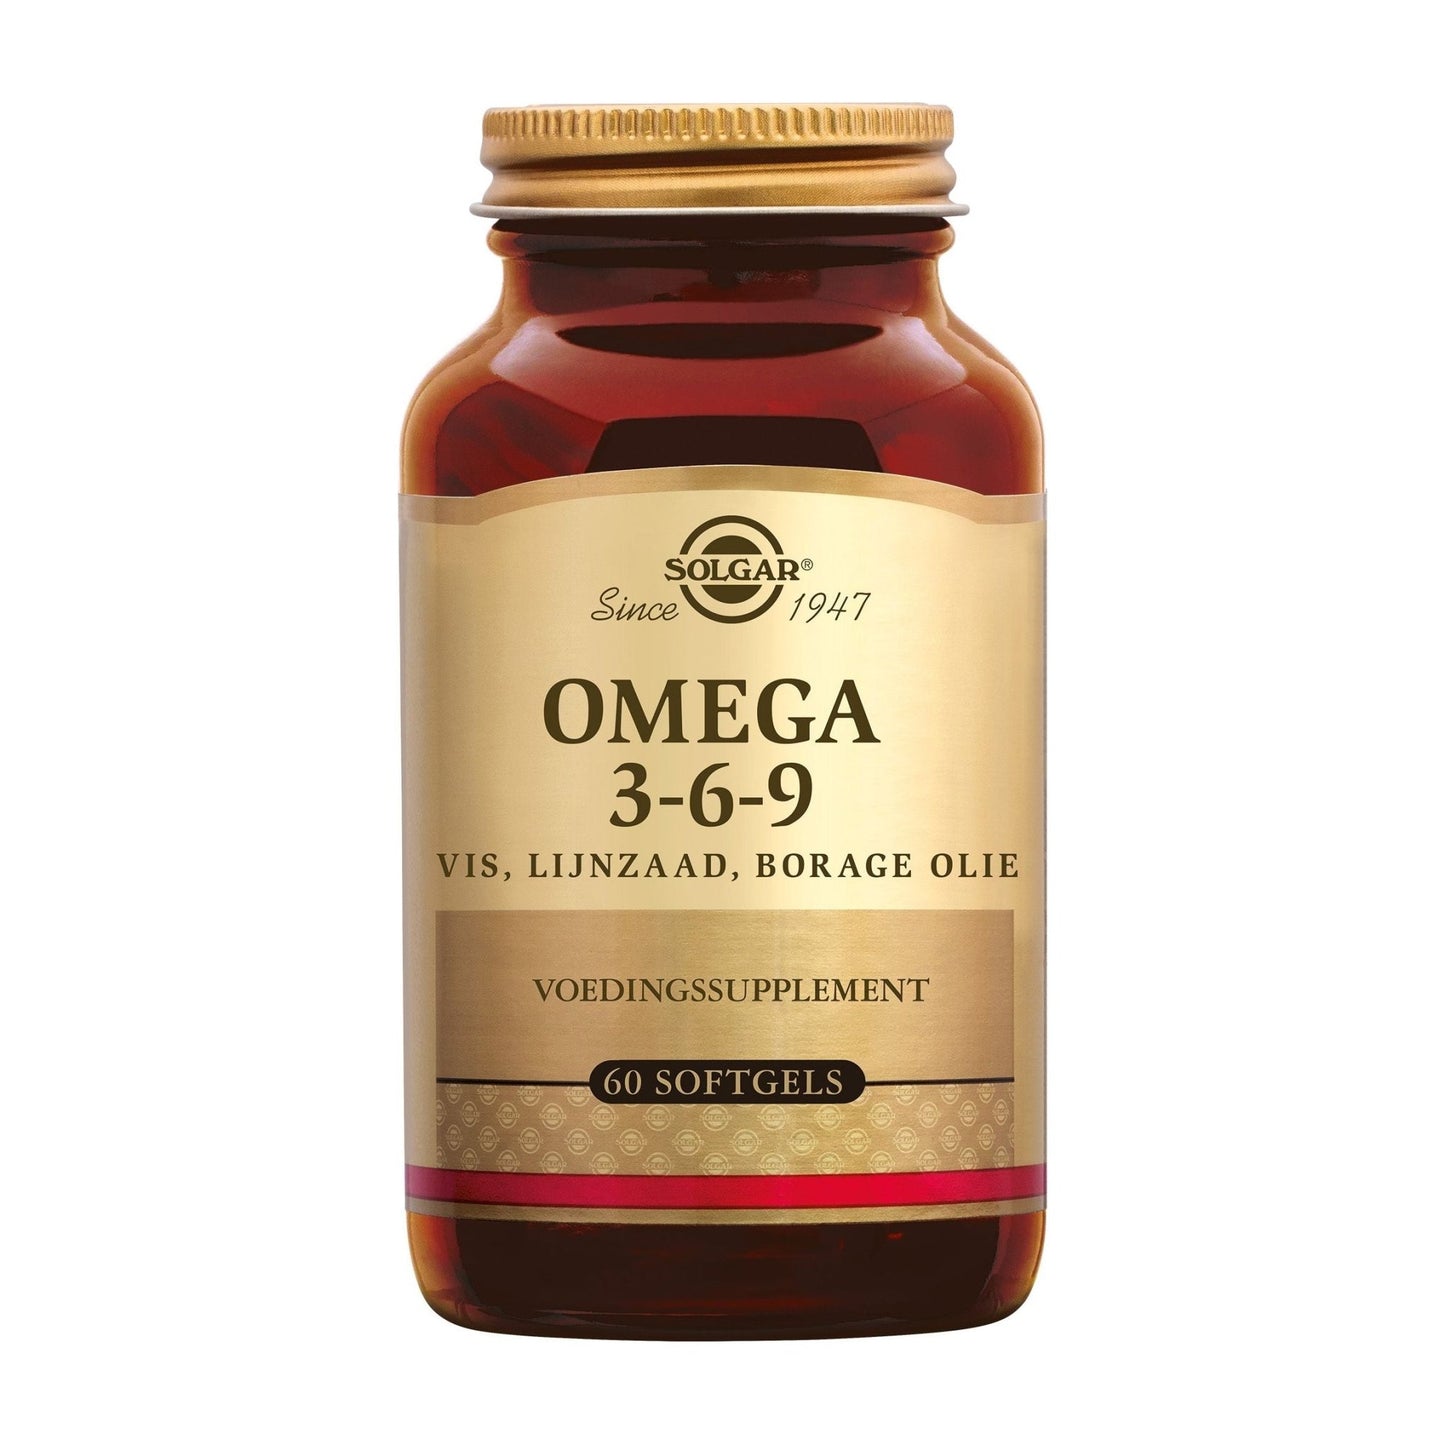 Omega 3-6-9 Supplement Solgar   